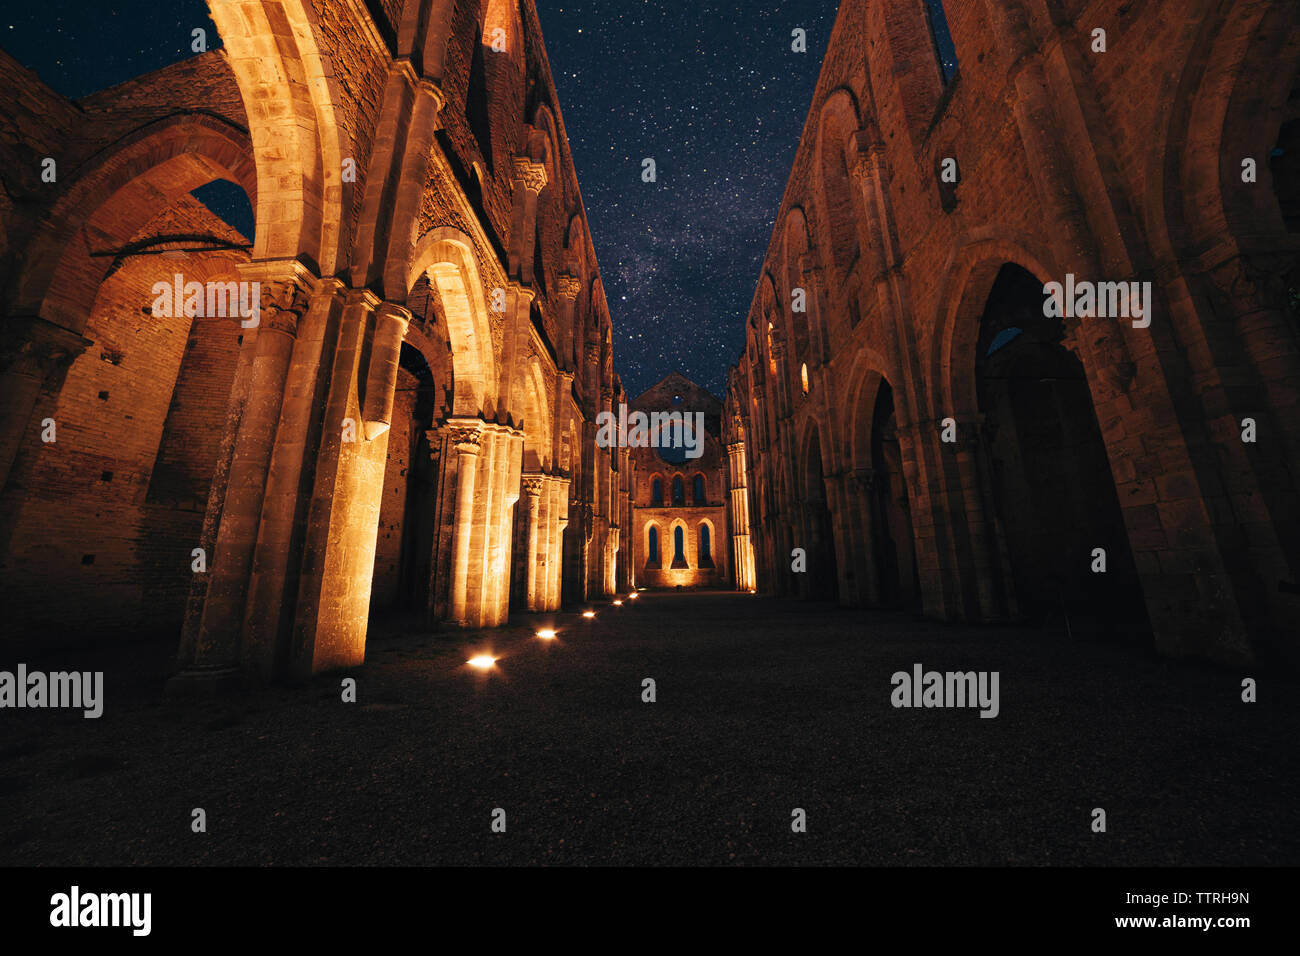 Abbey of San Galgano against star field at night Stock Photo